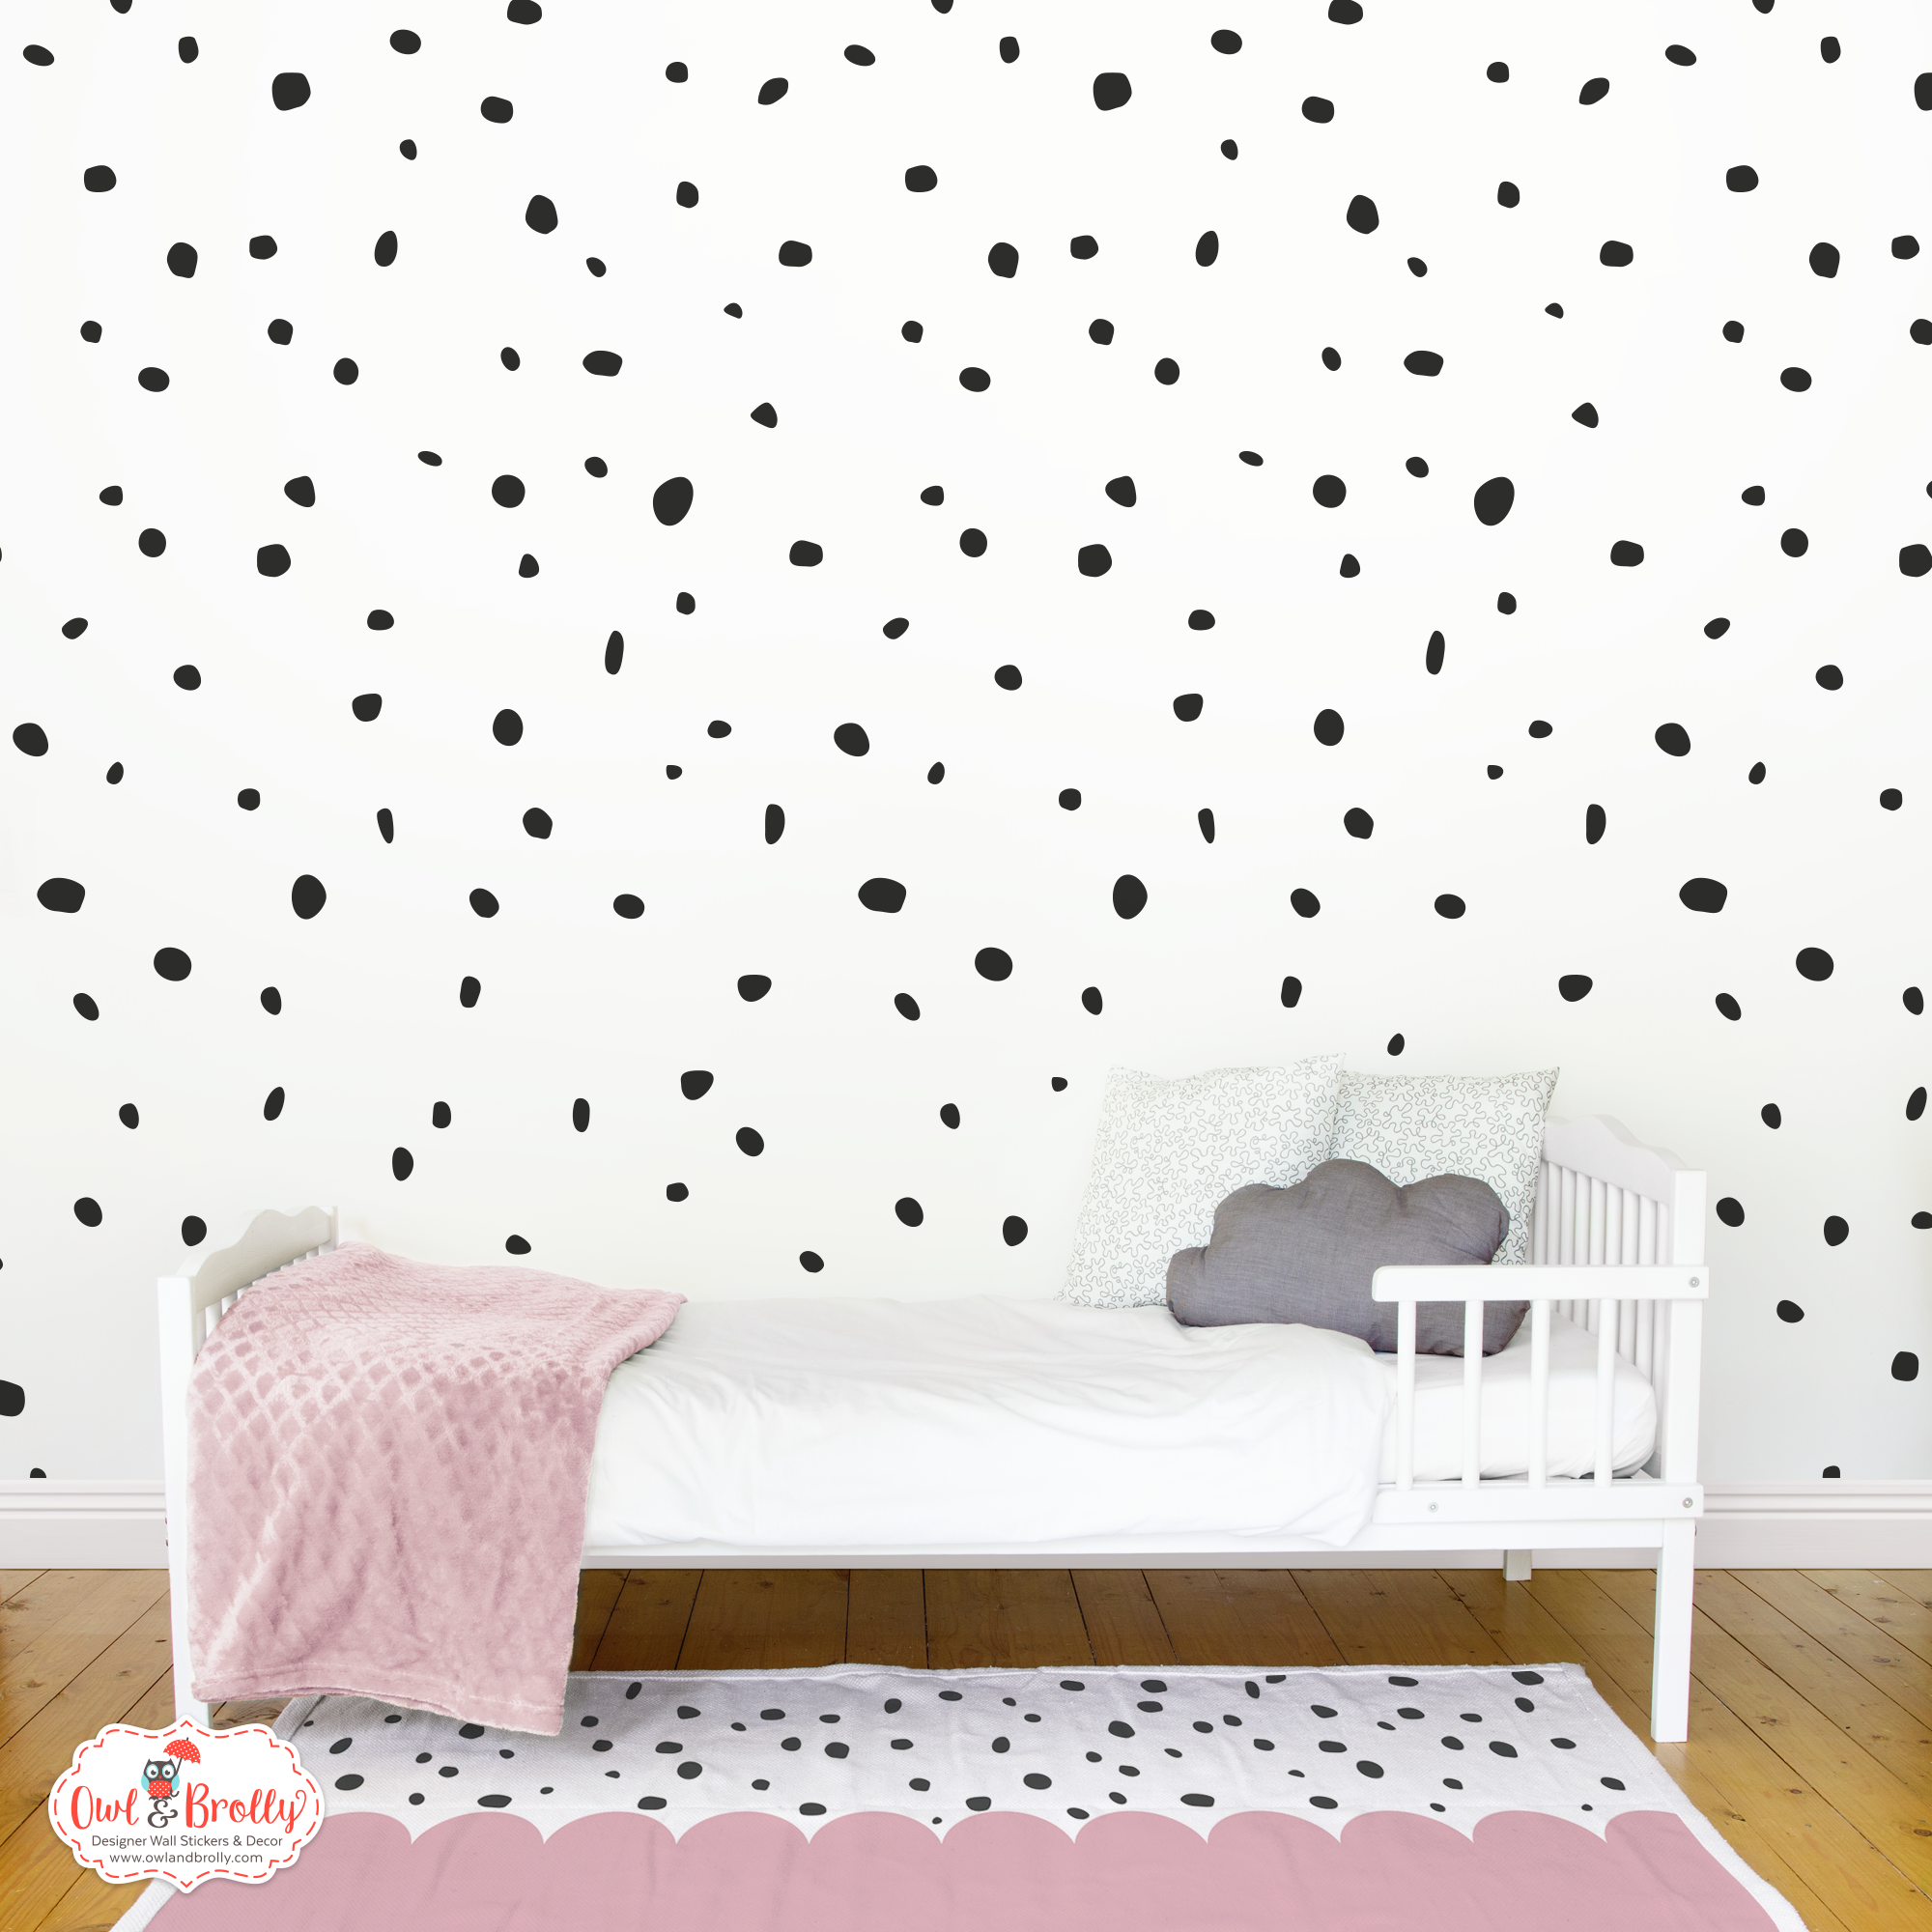 Dalmatian Spot Wall Sticker Decals (smaller spaces